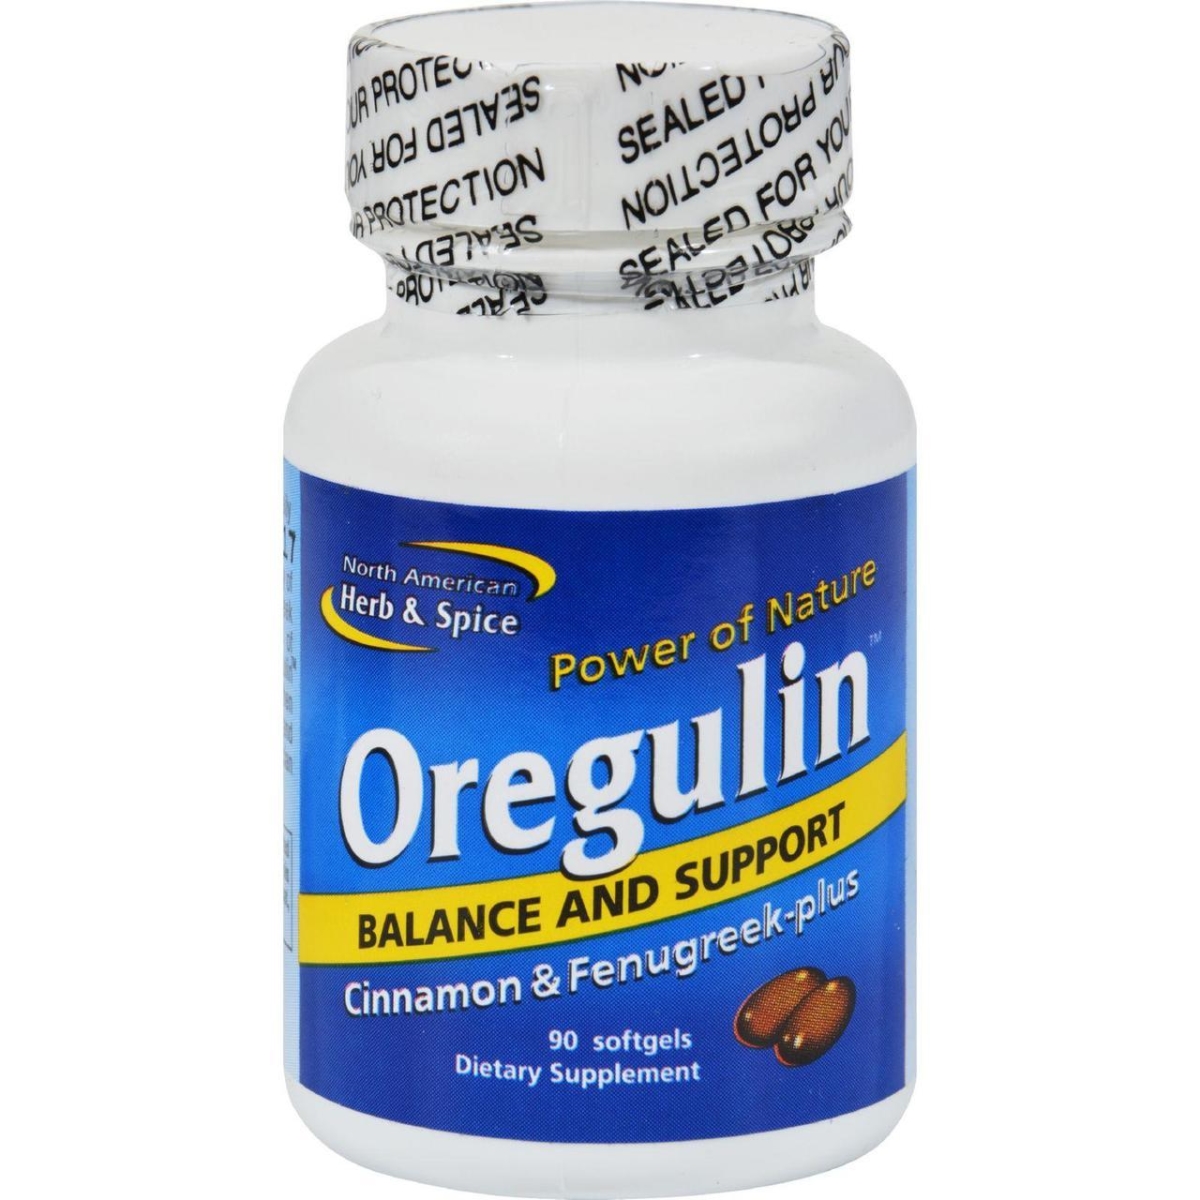 Hg0252874 Oregulin Blood Sugar Support - 90 Capsules